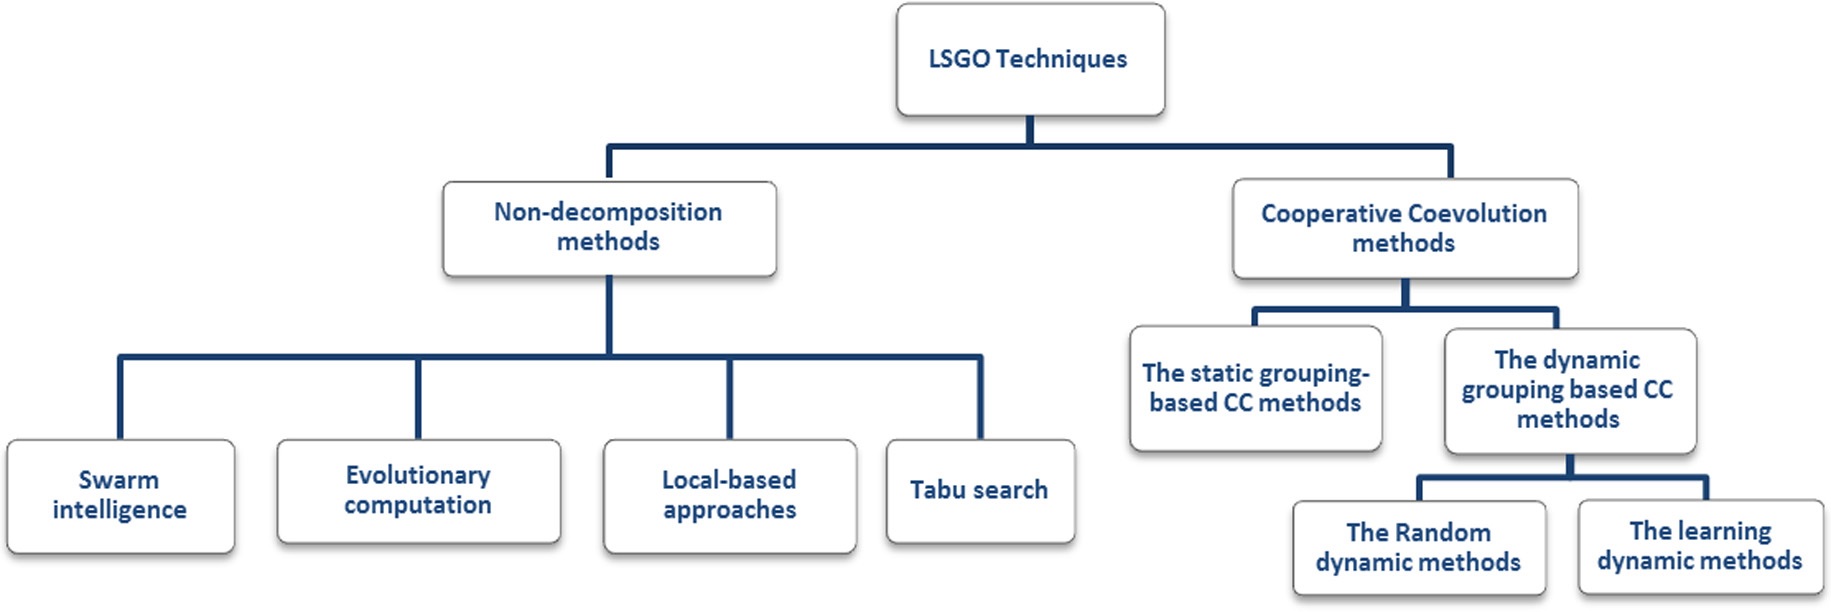 hierarchical-classification-lsgo-techniques